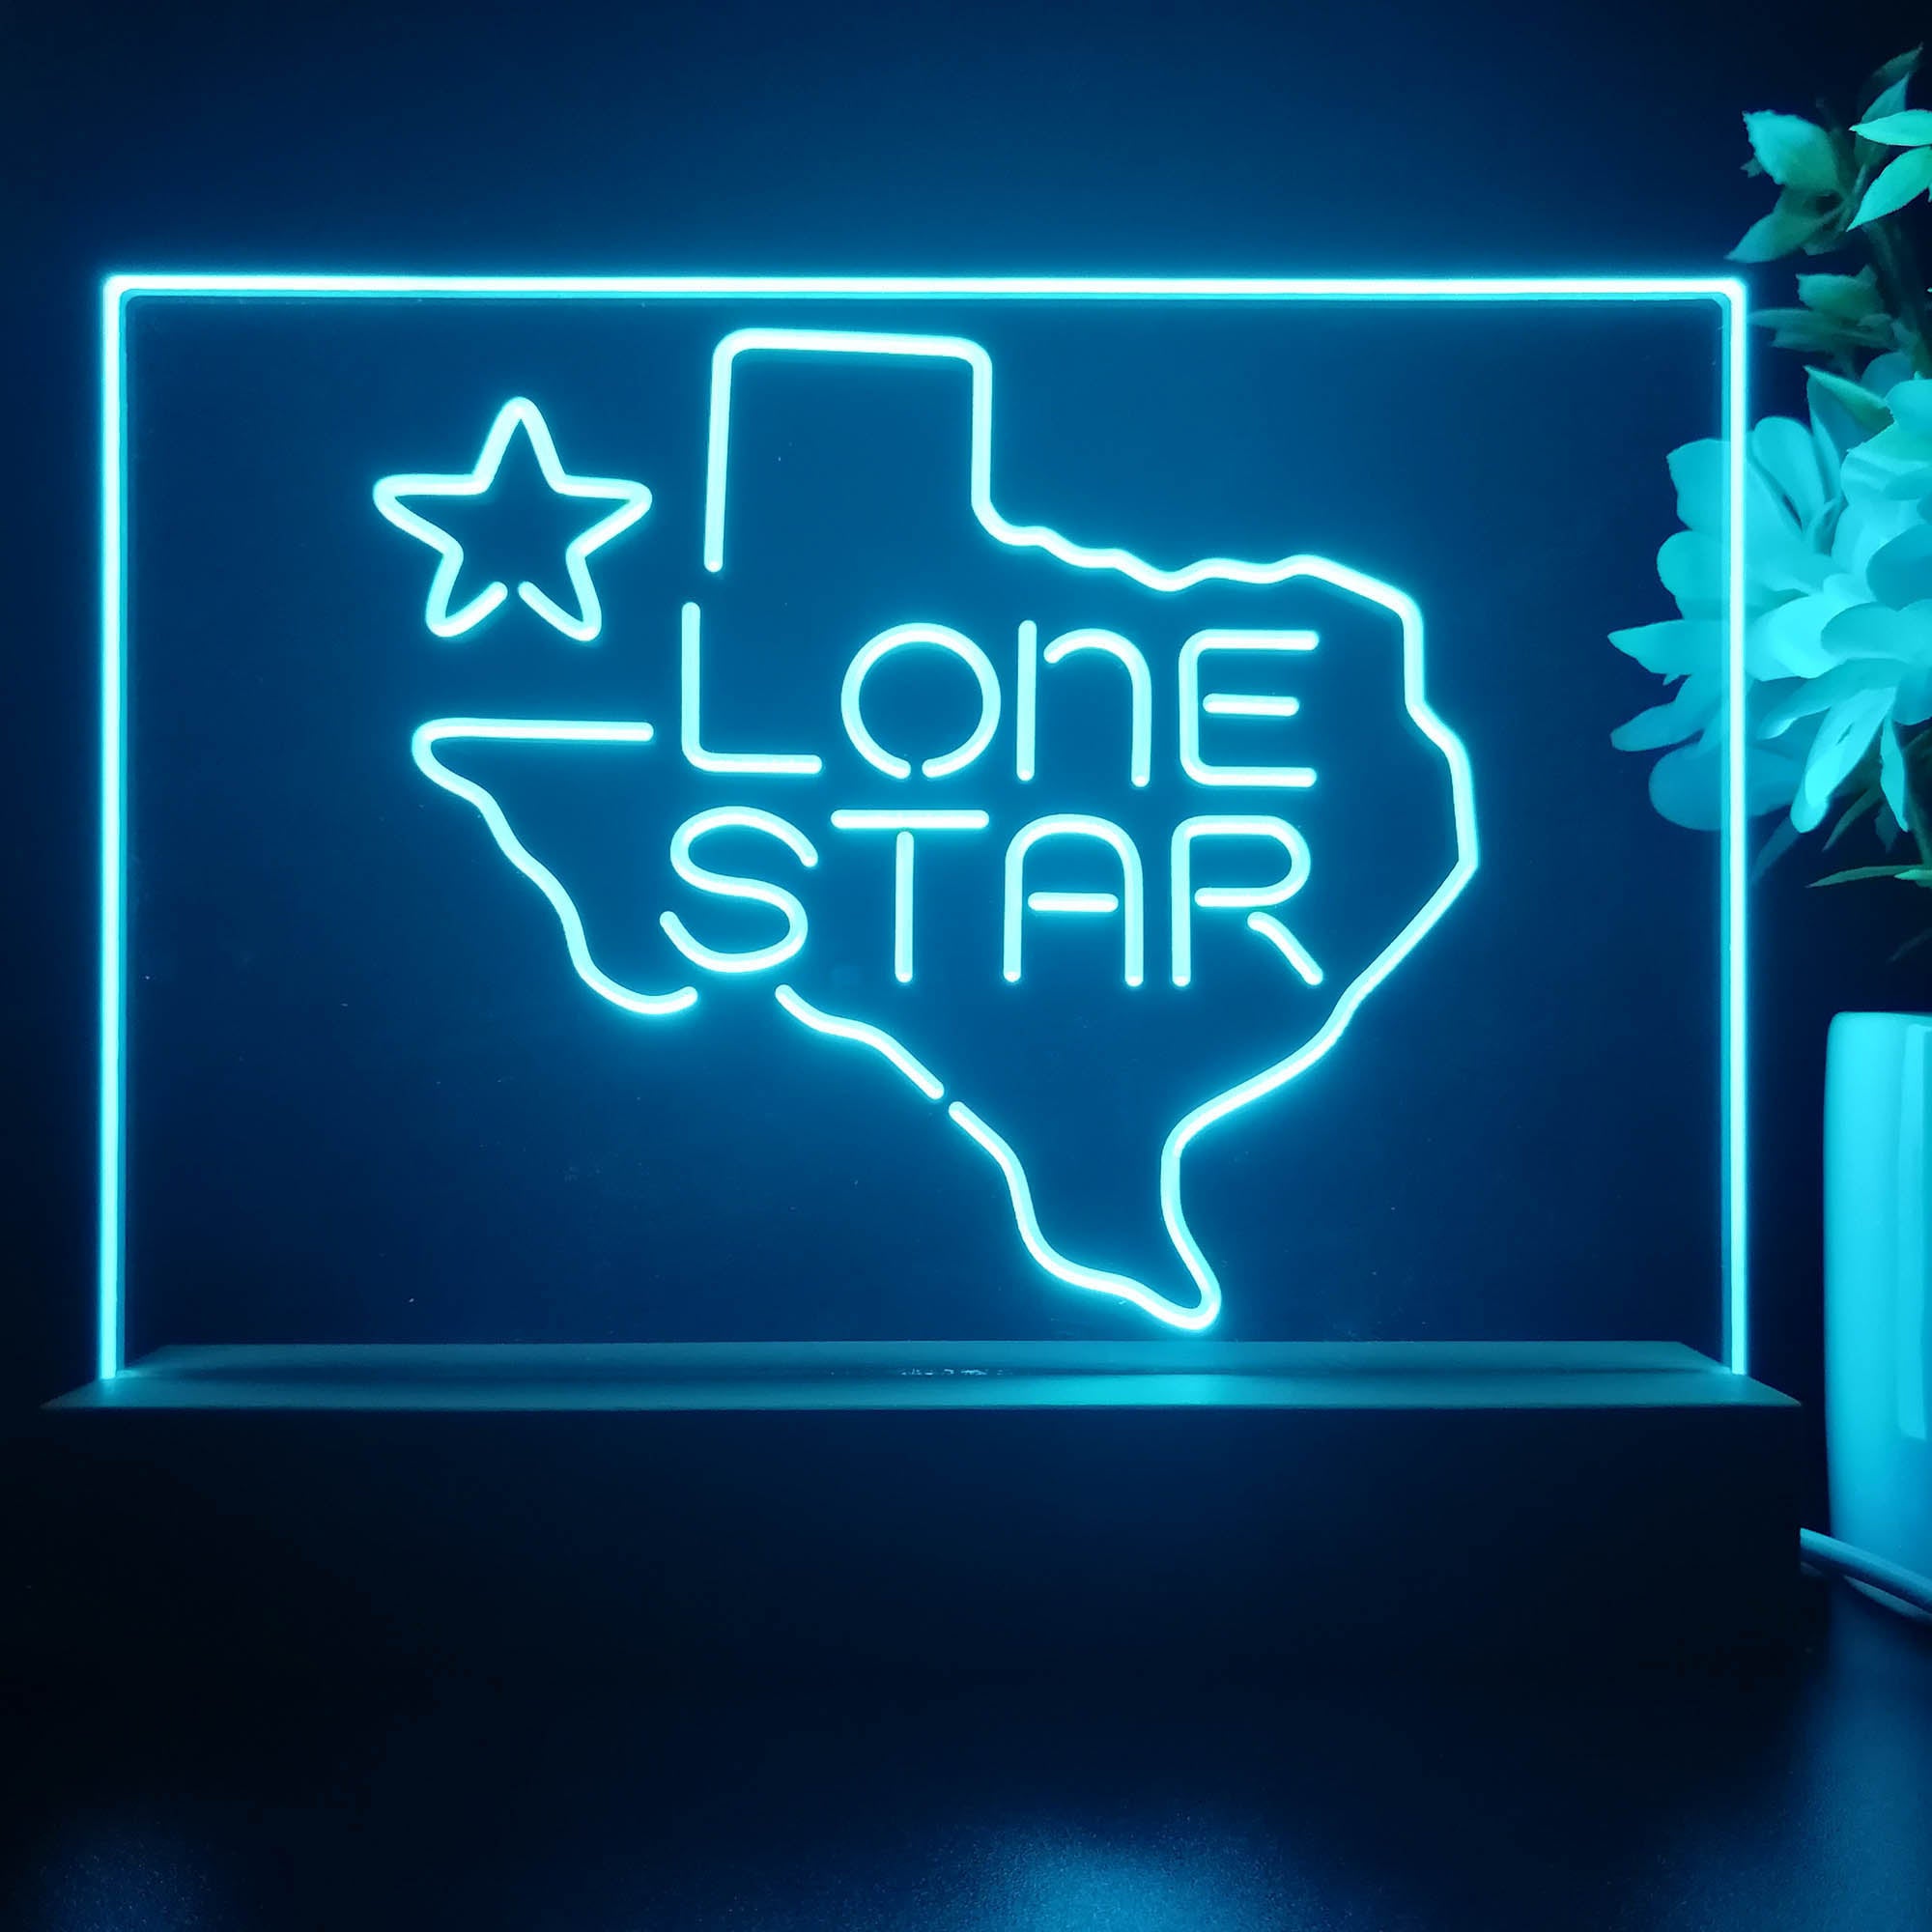 Texas Lone Star Beer Bar Neon Sign Pub Bar Lamp